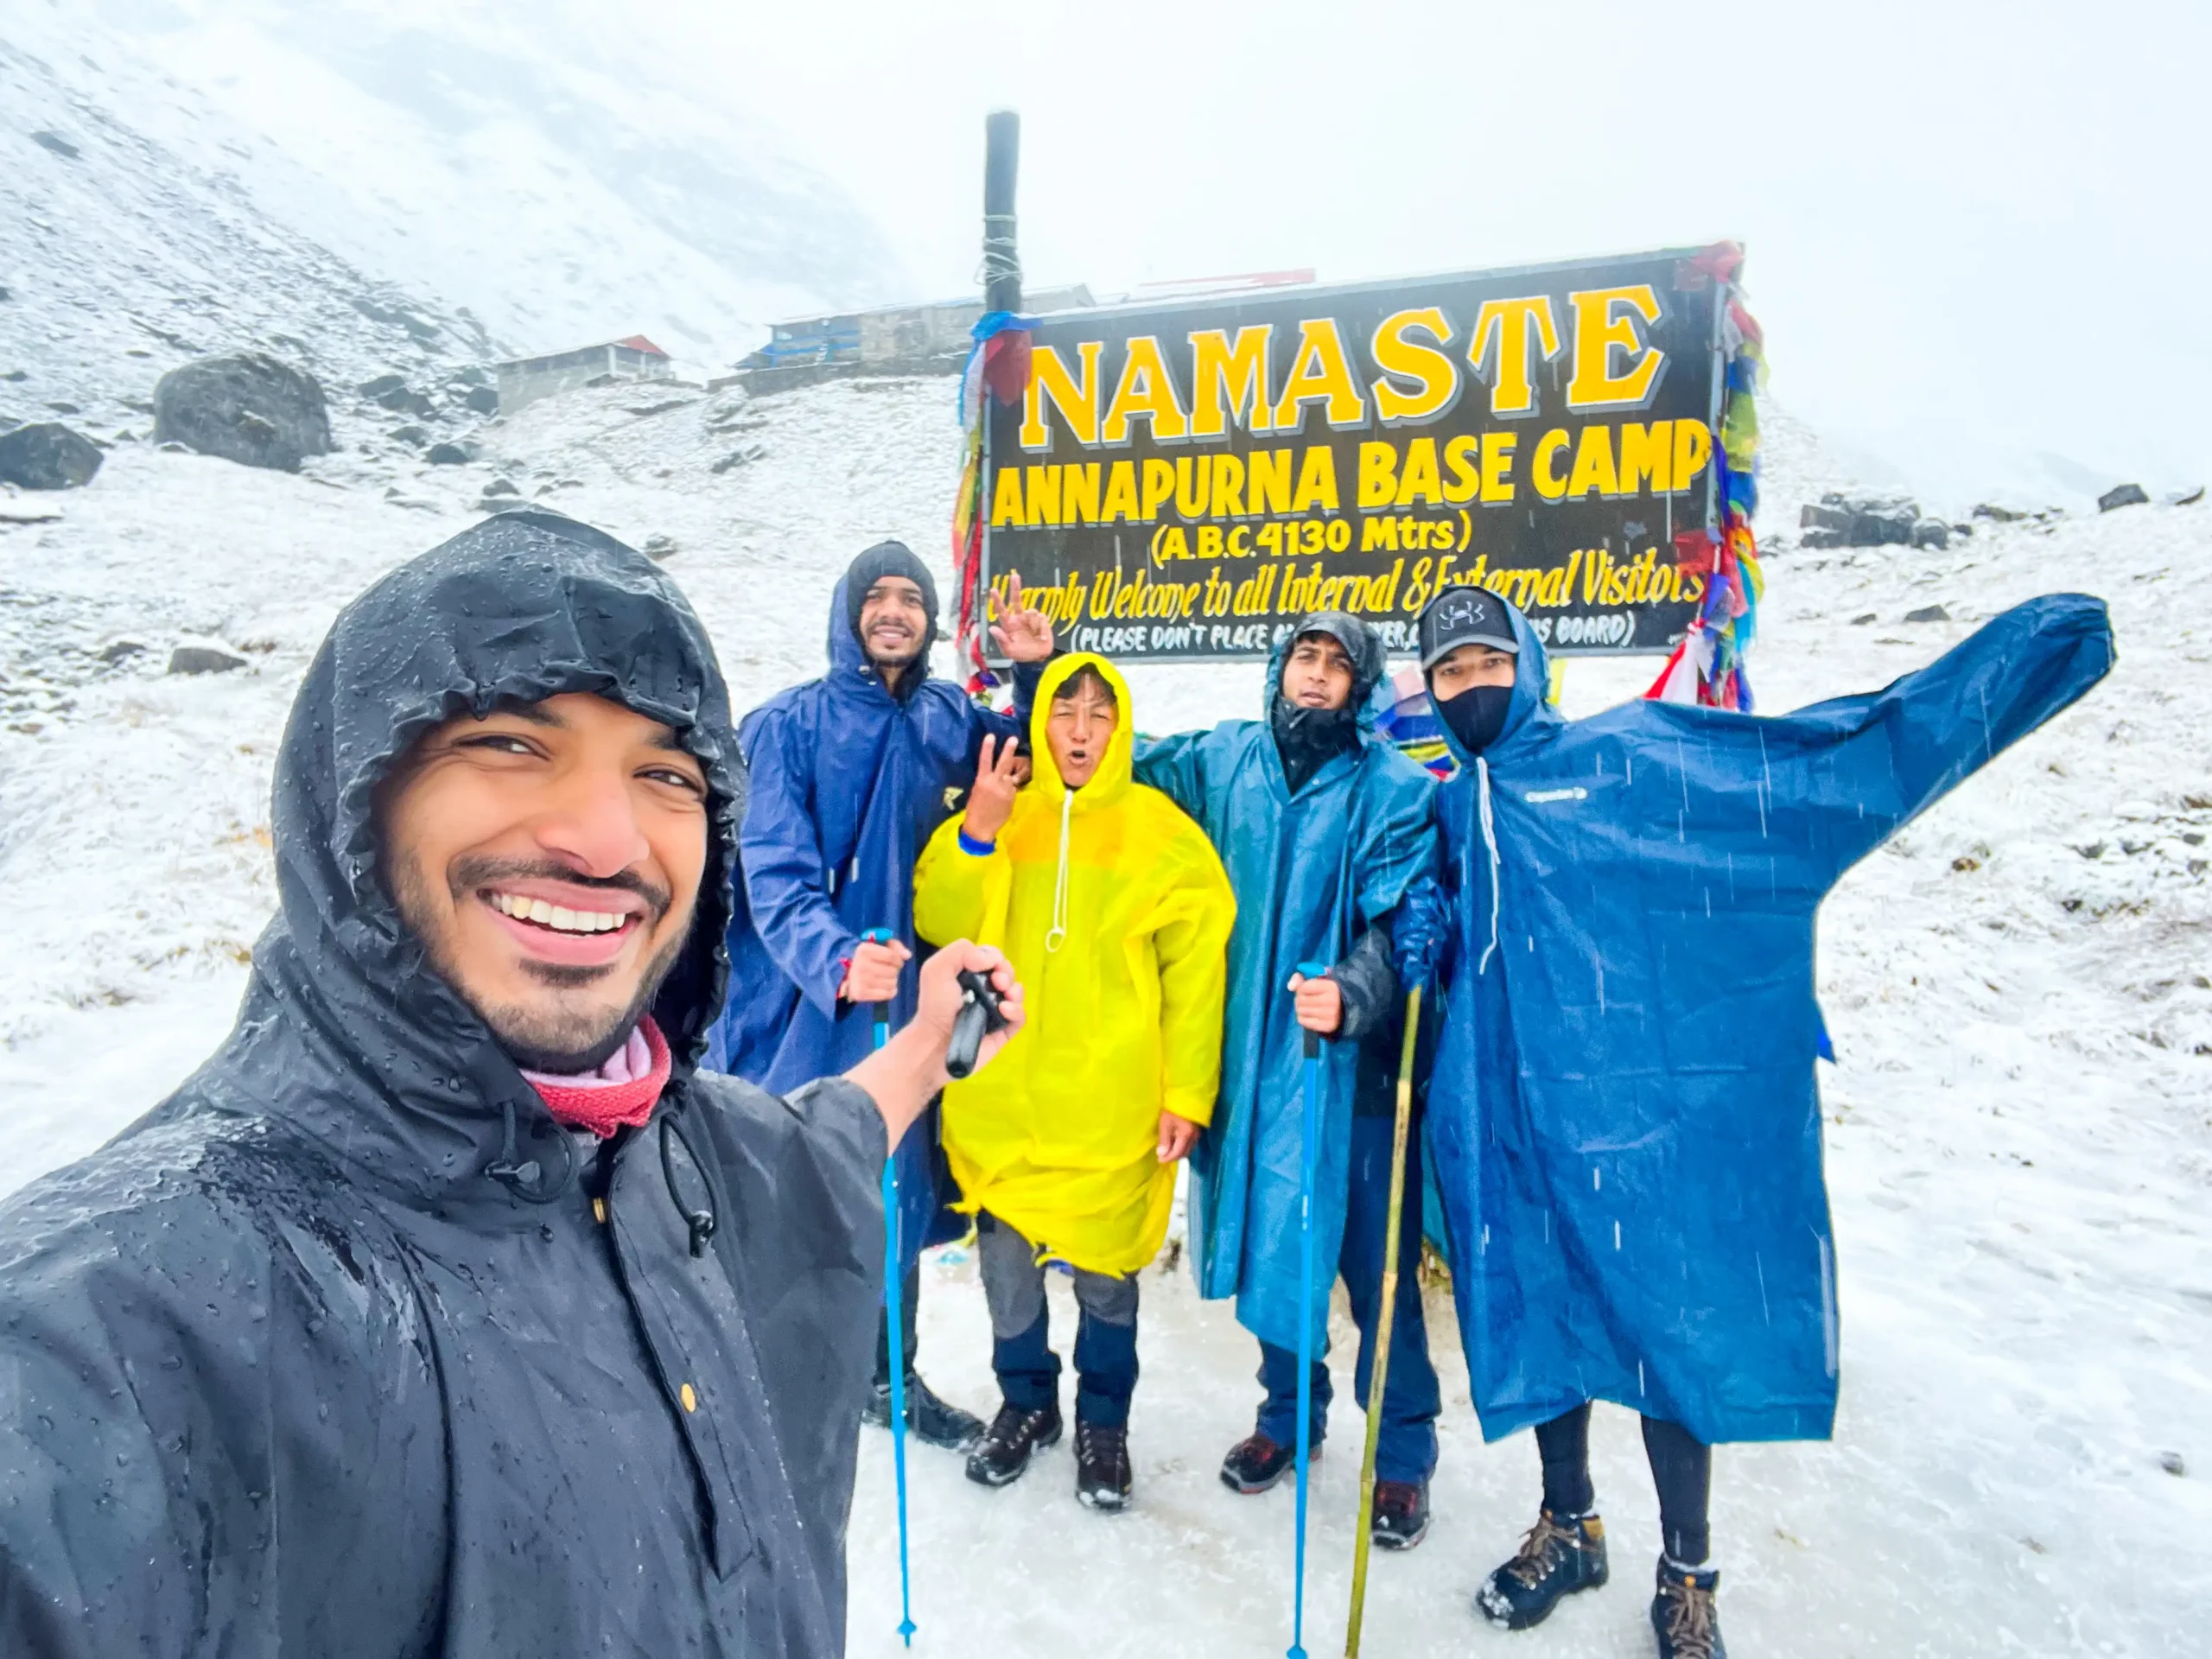 Annapurna Base Camp Trek (ABC) – (Xplore The Earth): At the ABC summit amidst snow